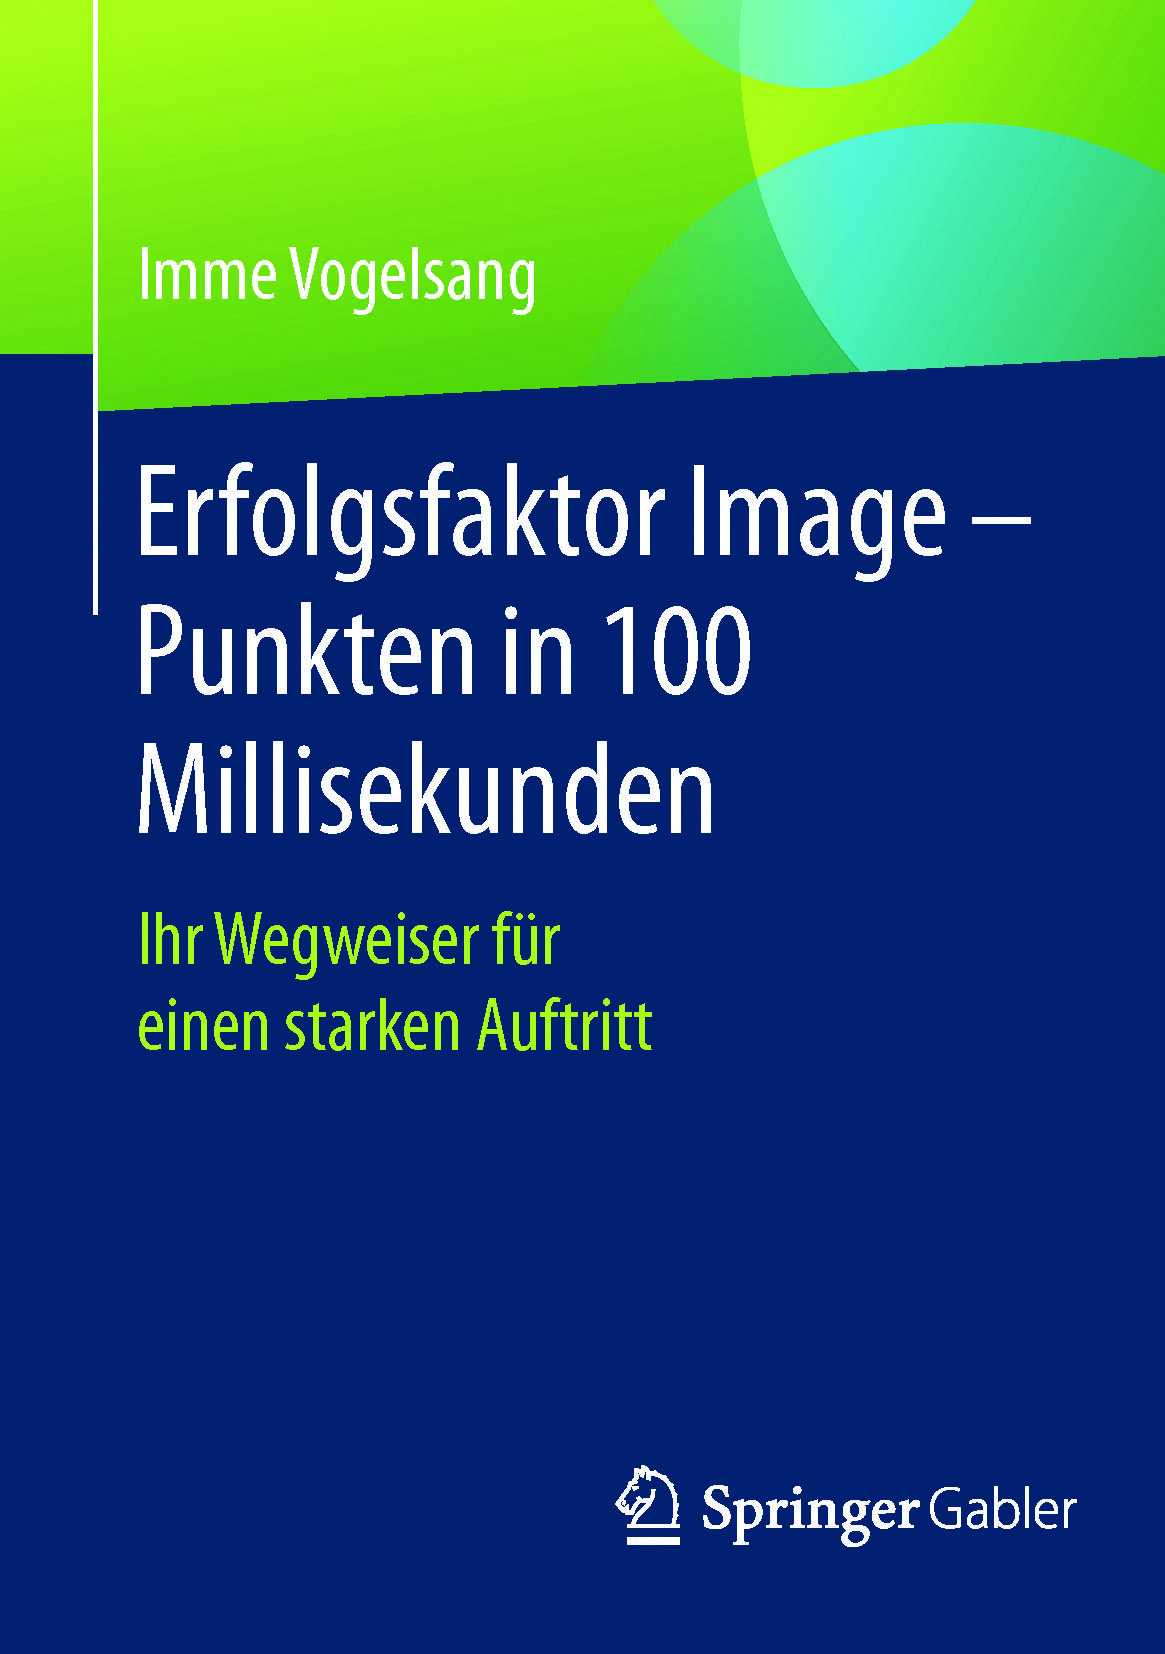 Vogelsang, Imme - Erfolgsfaktor Image – Punkten in 100 Millisekunden, ebook